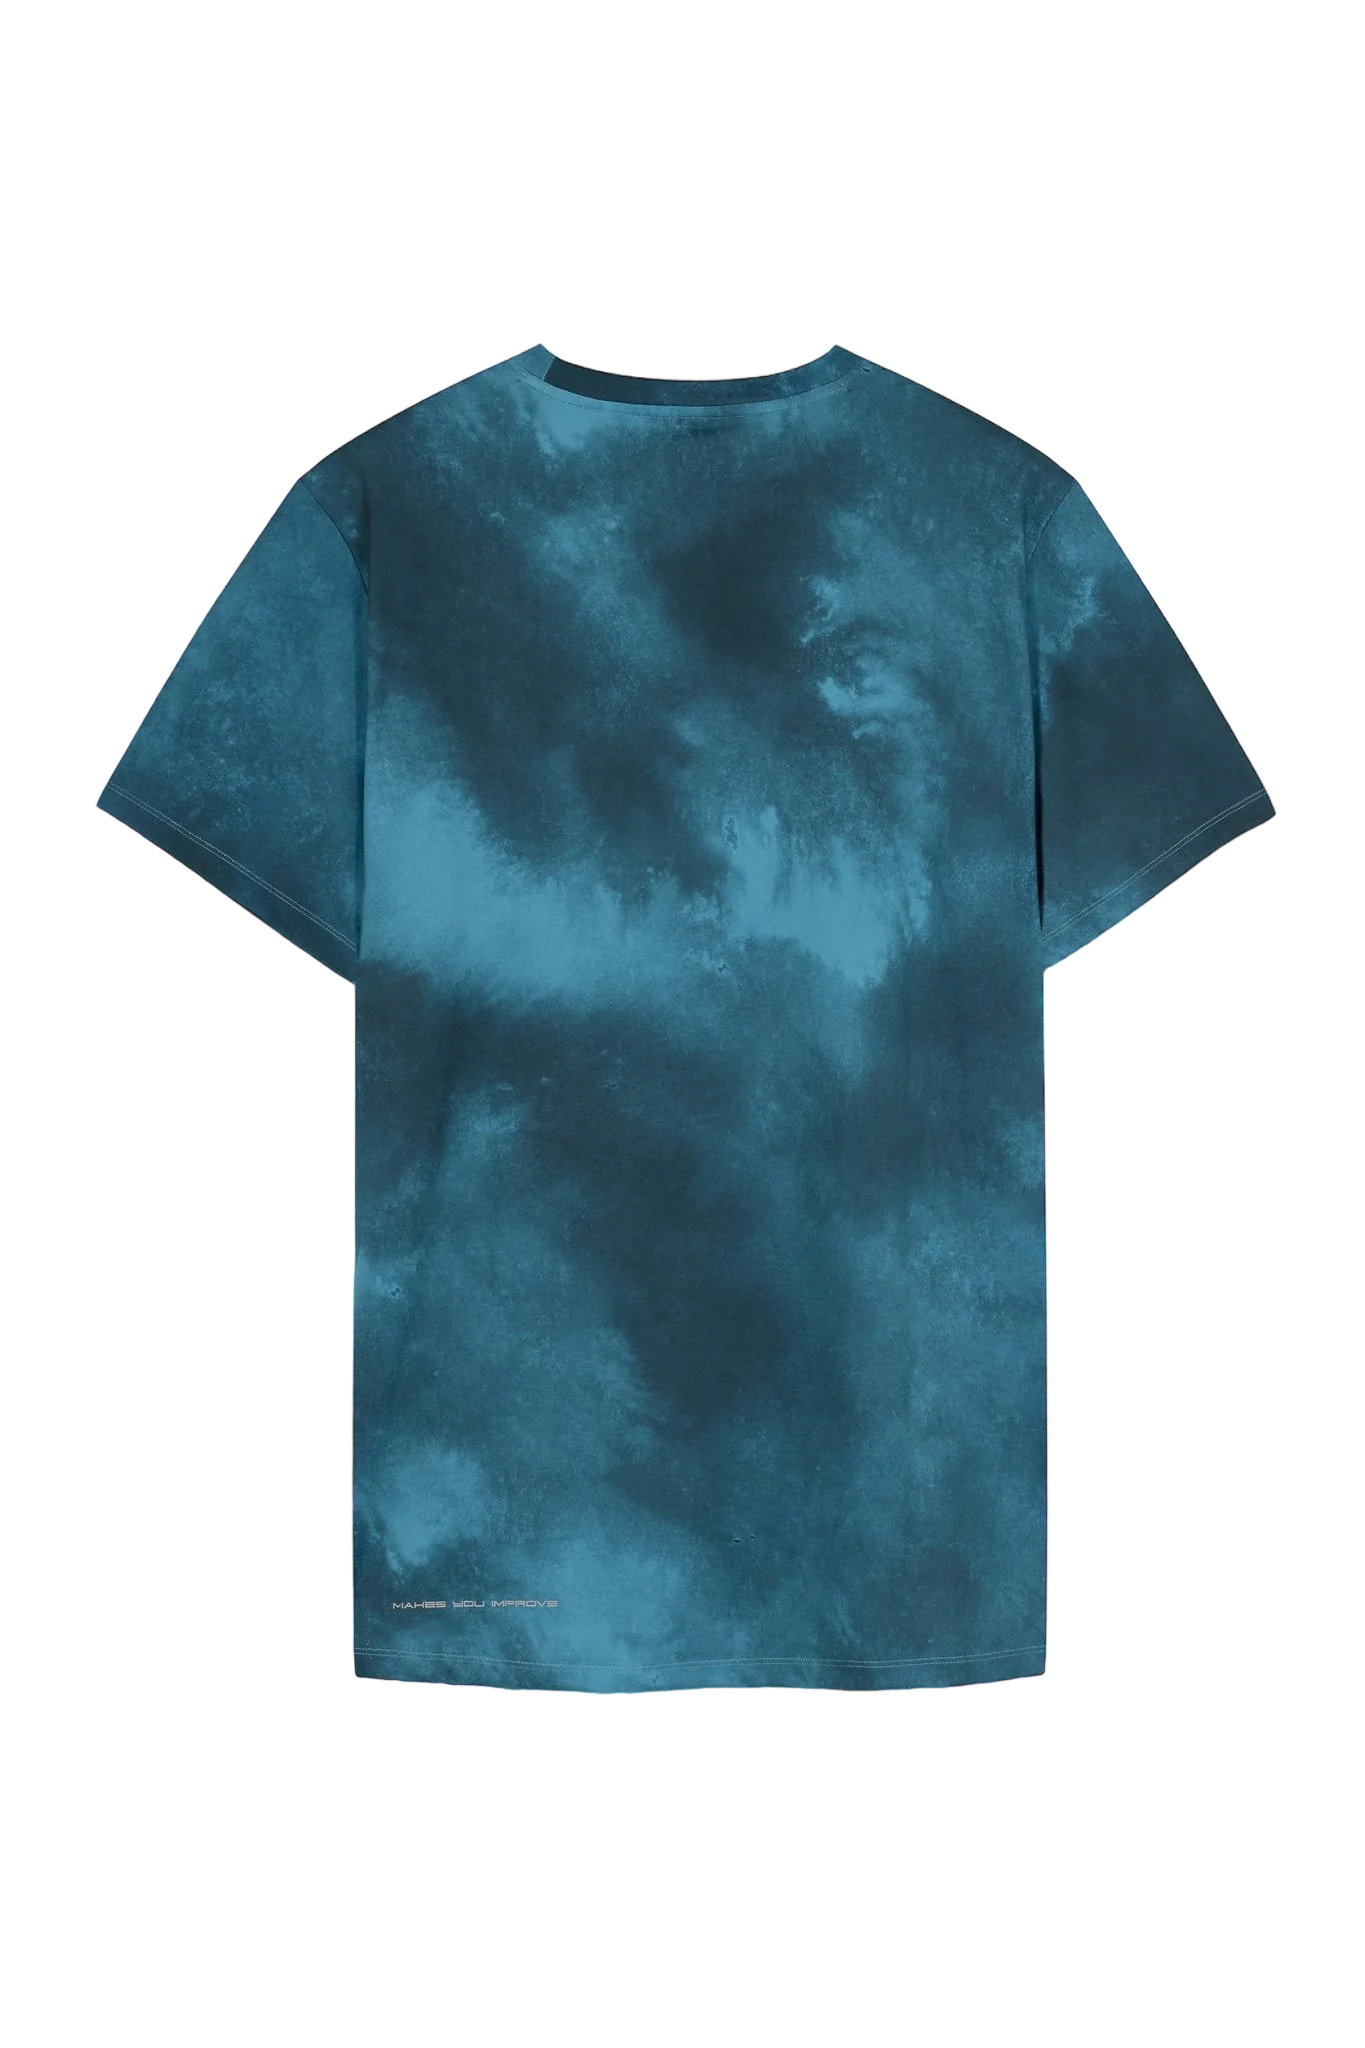 Nox Pro T-Shirt Nicolas Gianotti Storm Blue